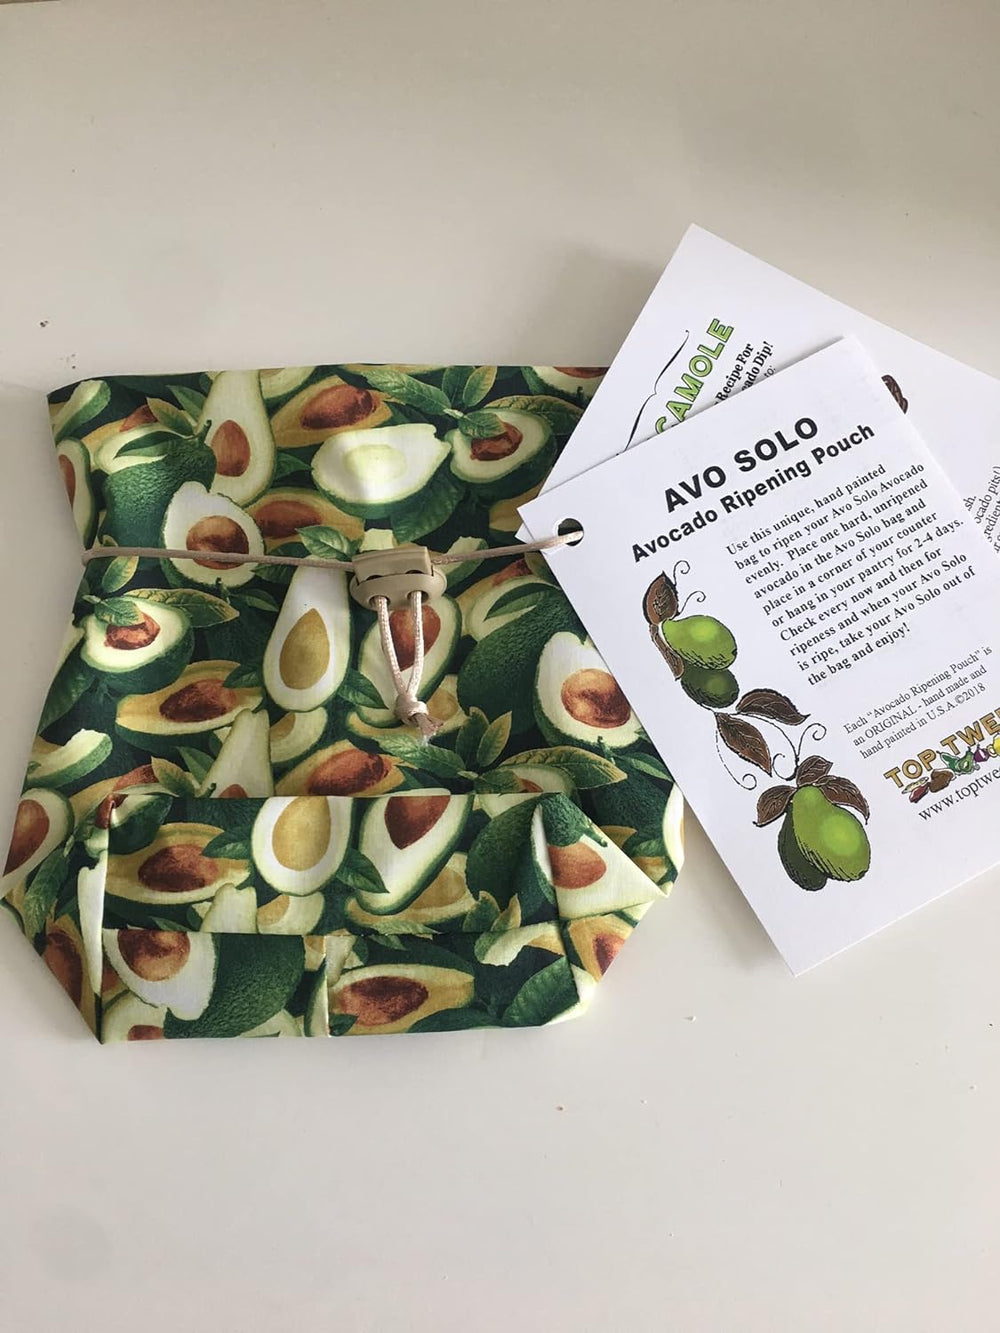 Avocado Bag Cozy for Ripening a Single Avocado Avo Solo